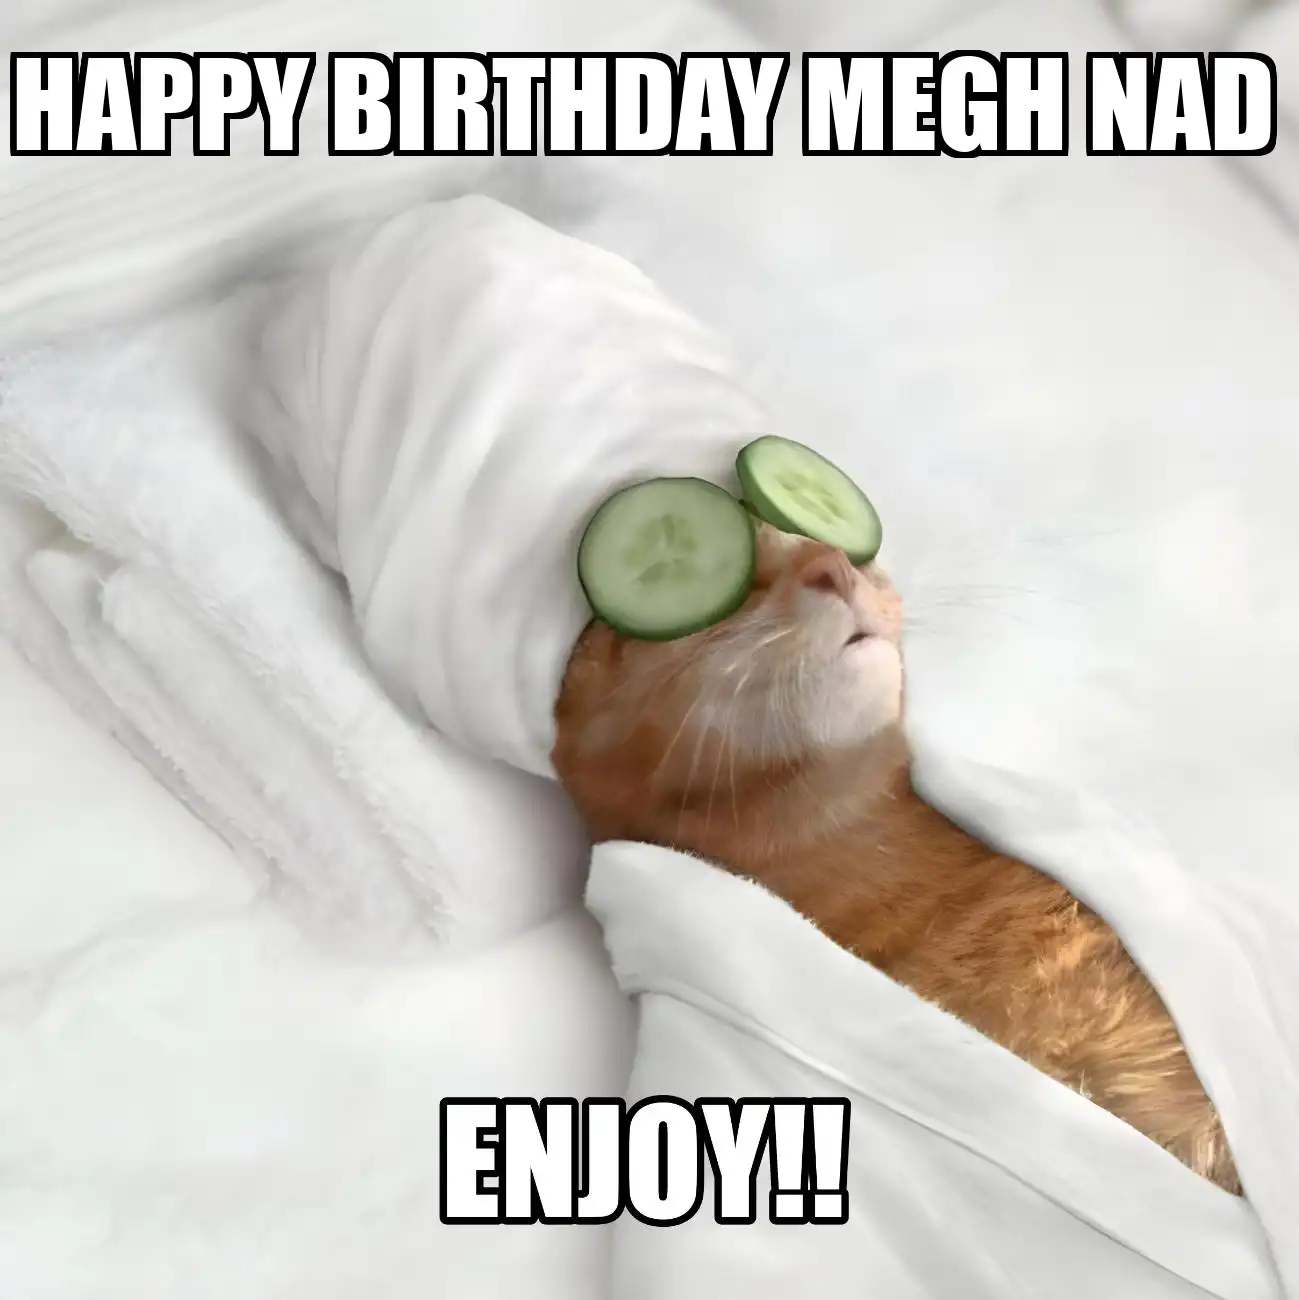 Happy Birthday Megh Nad Enjoy Cat Meme